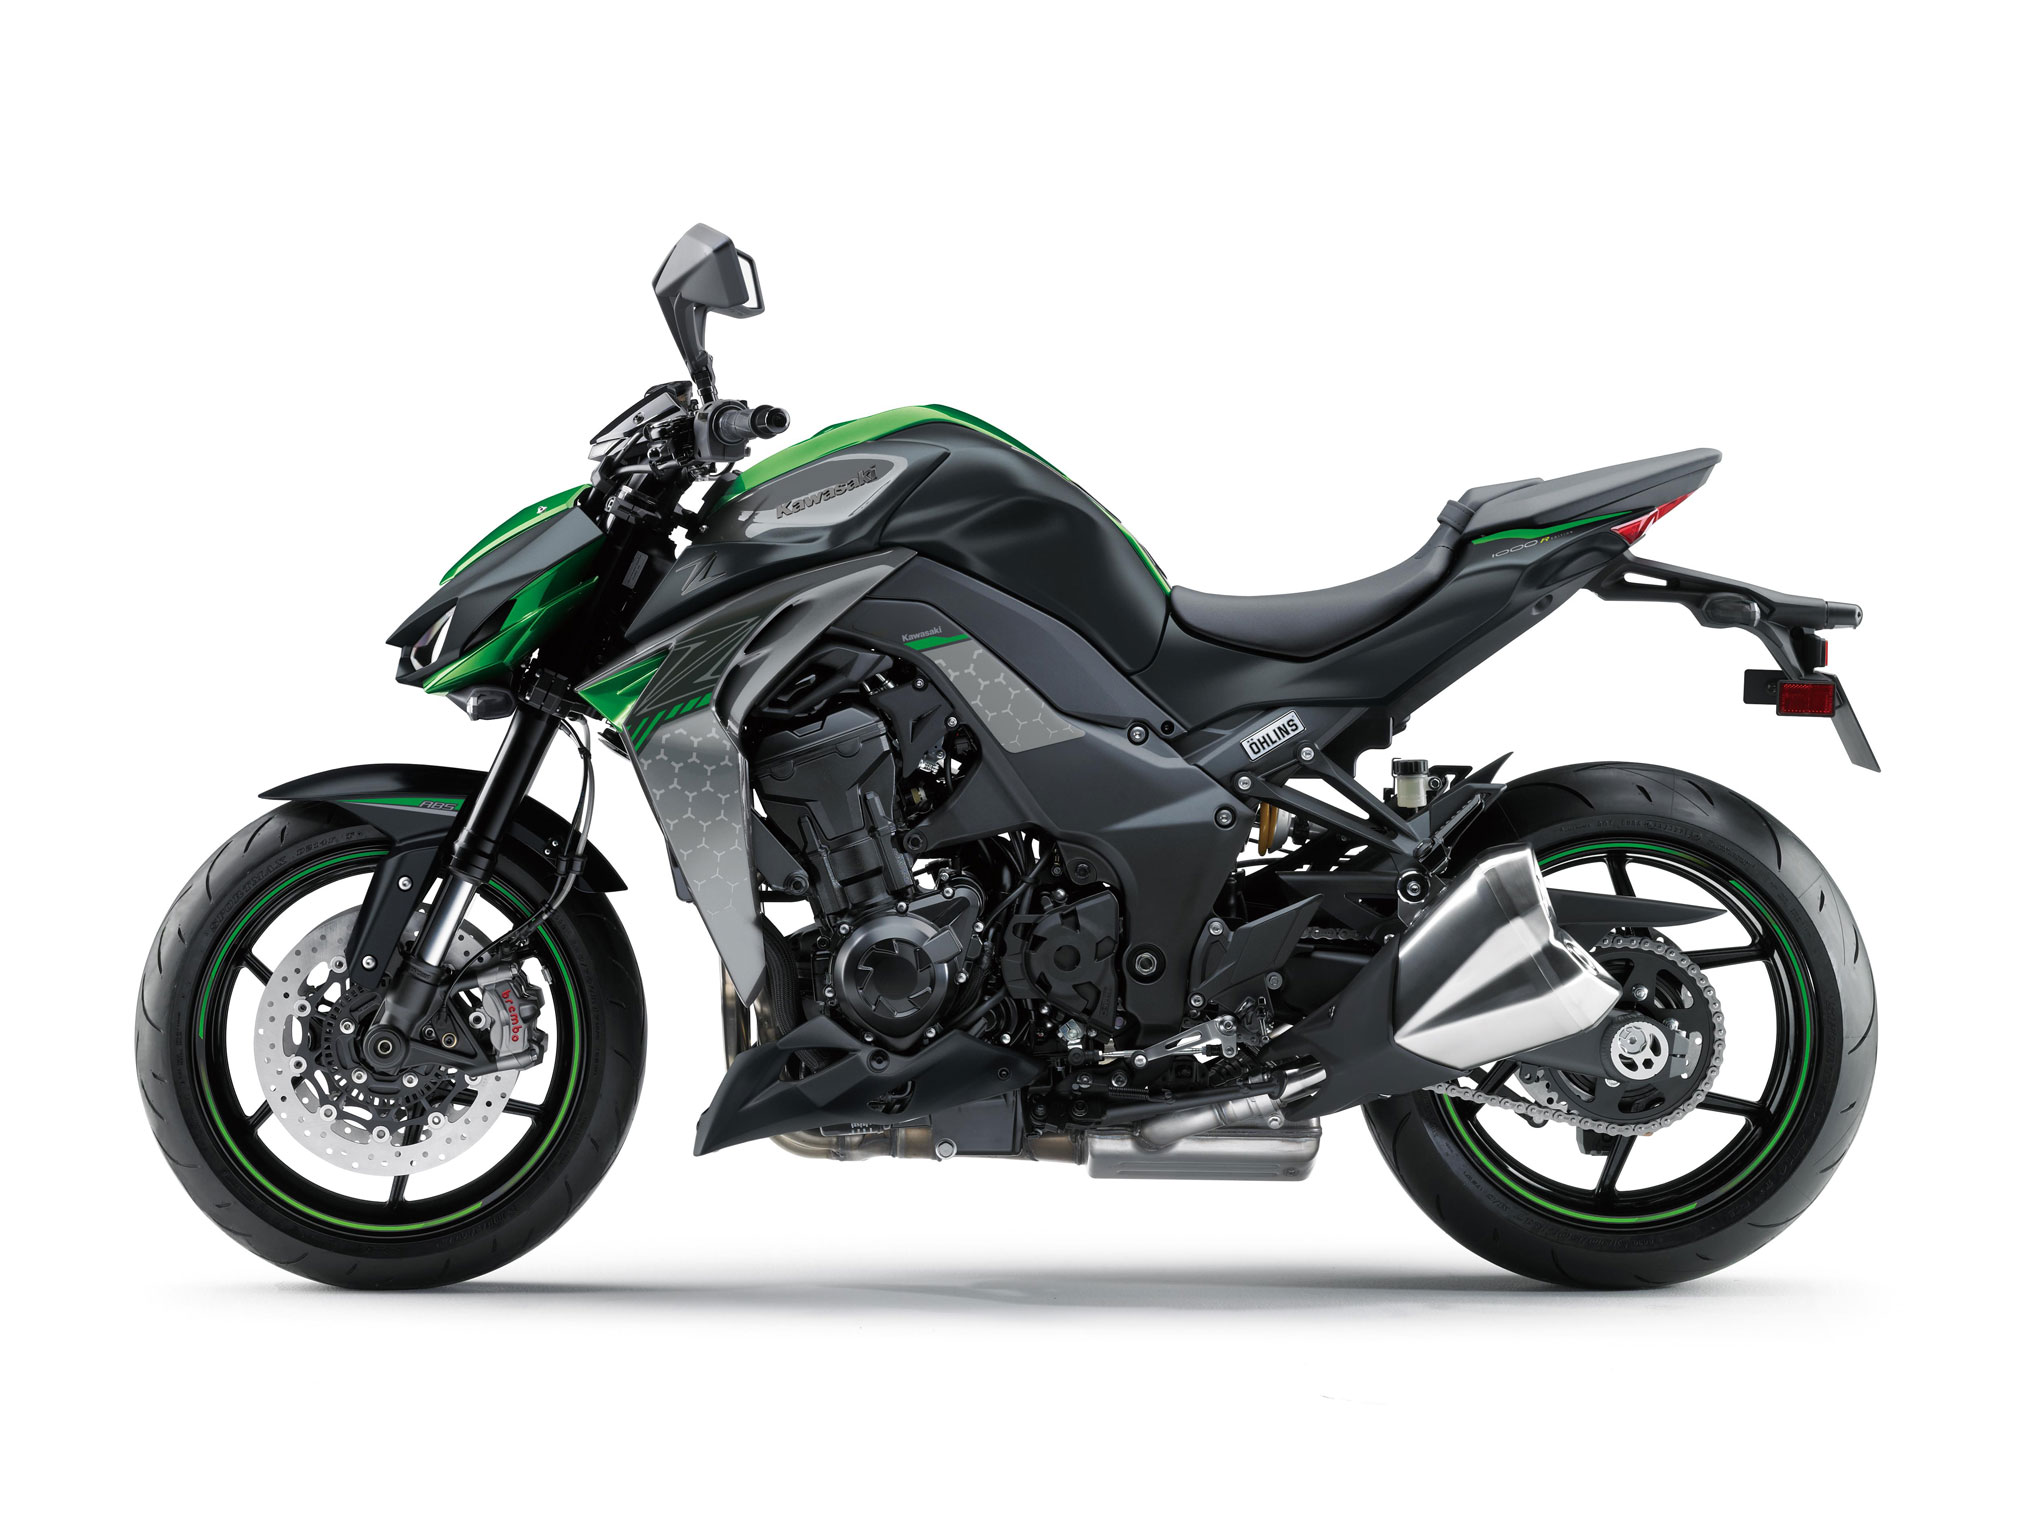 2019 Kawasaki Z1000R ABS Guide • Total Motorcycle